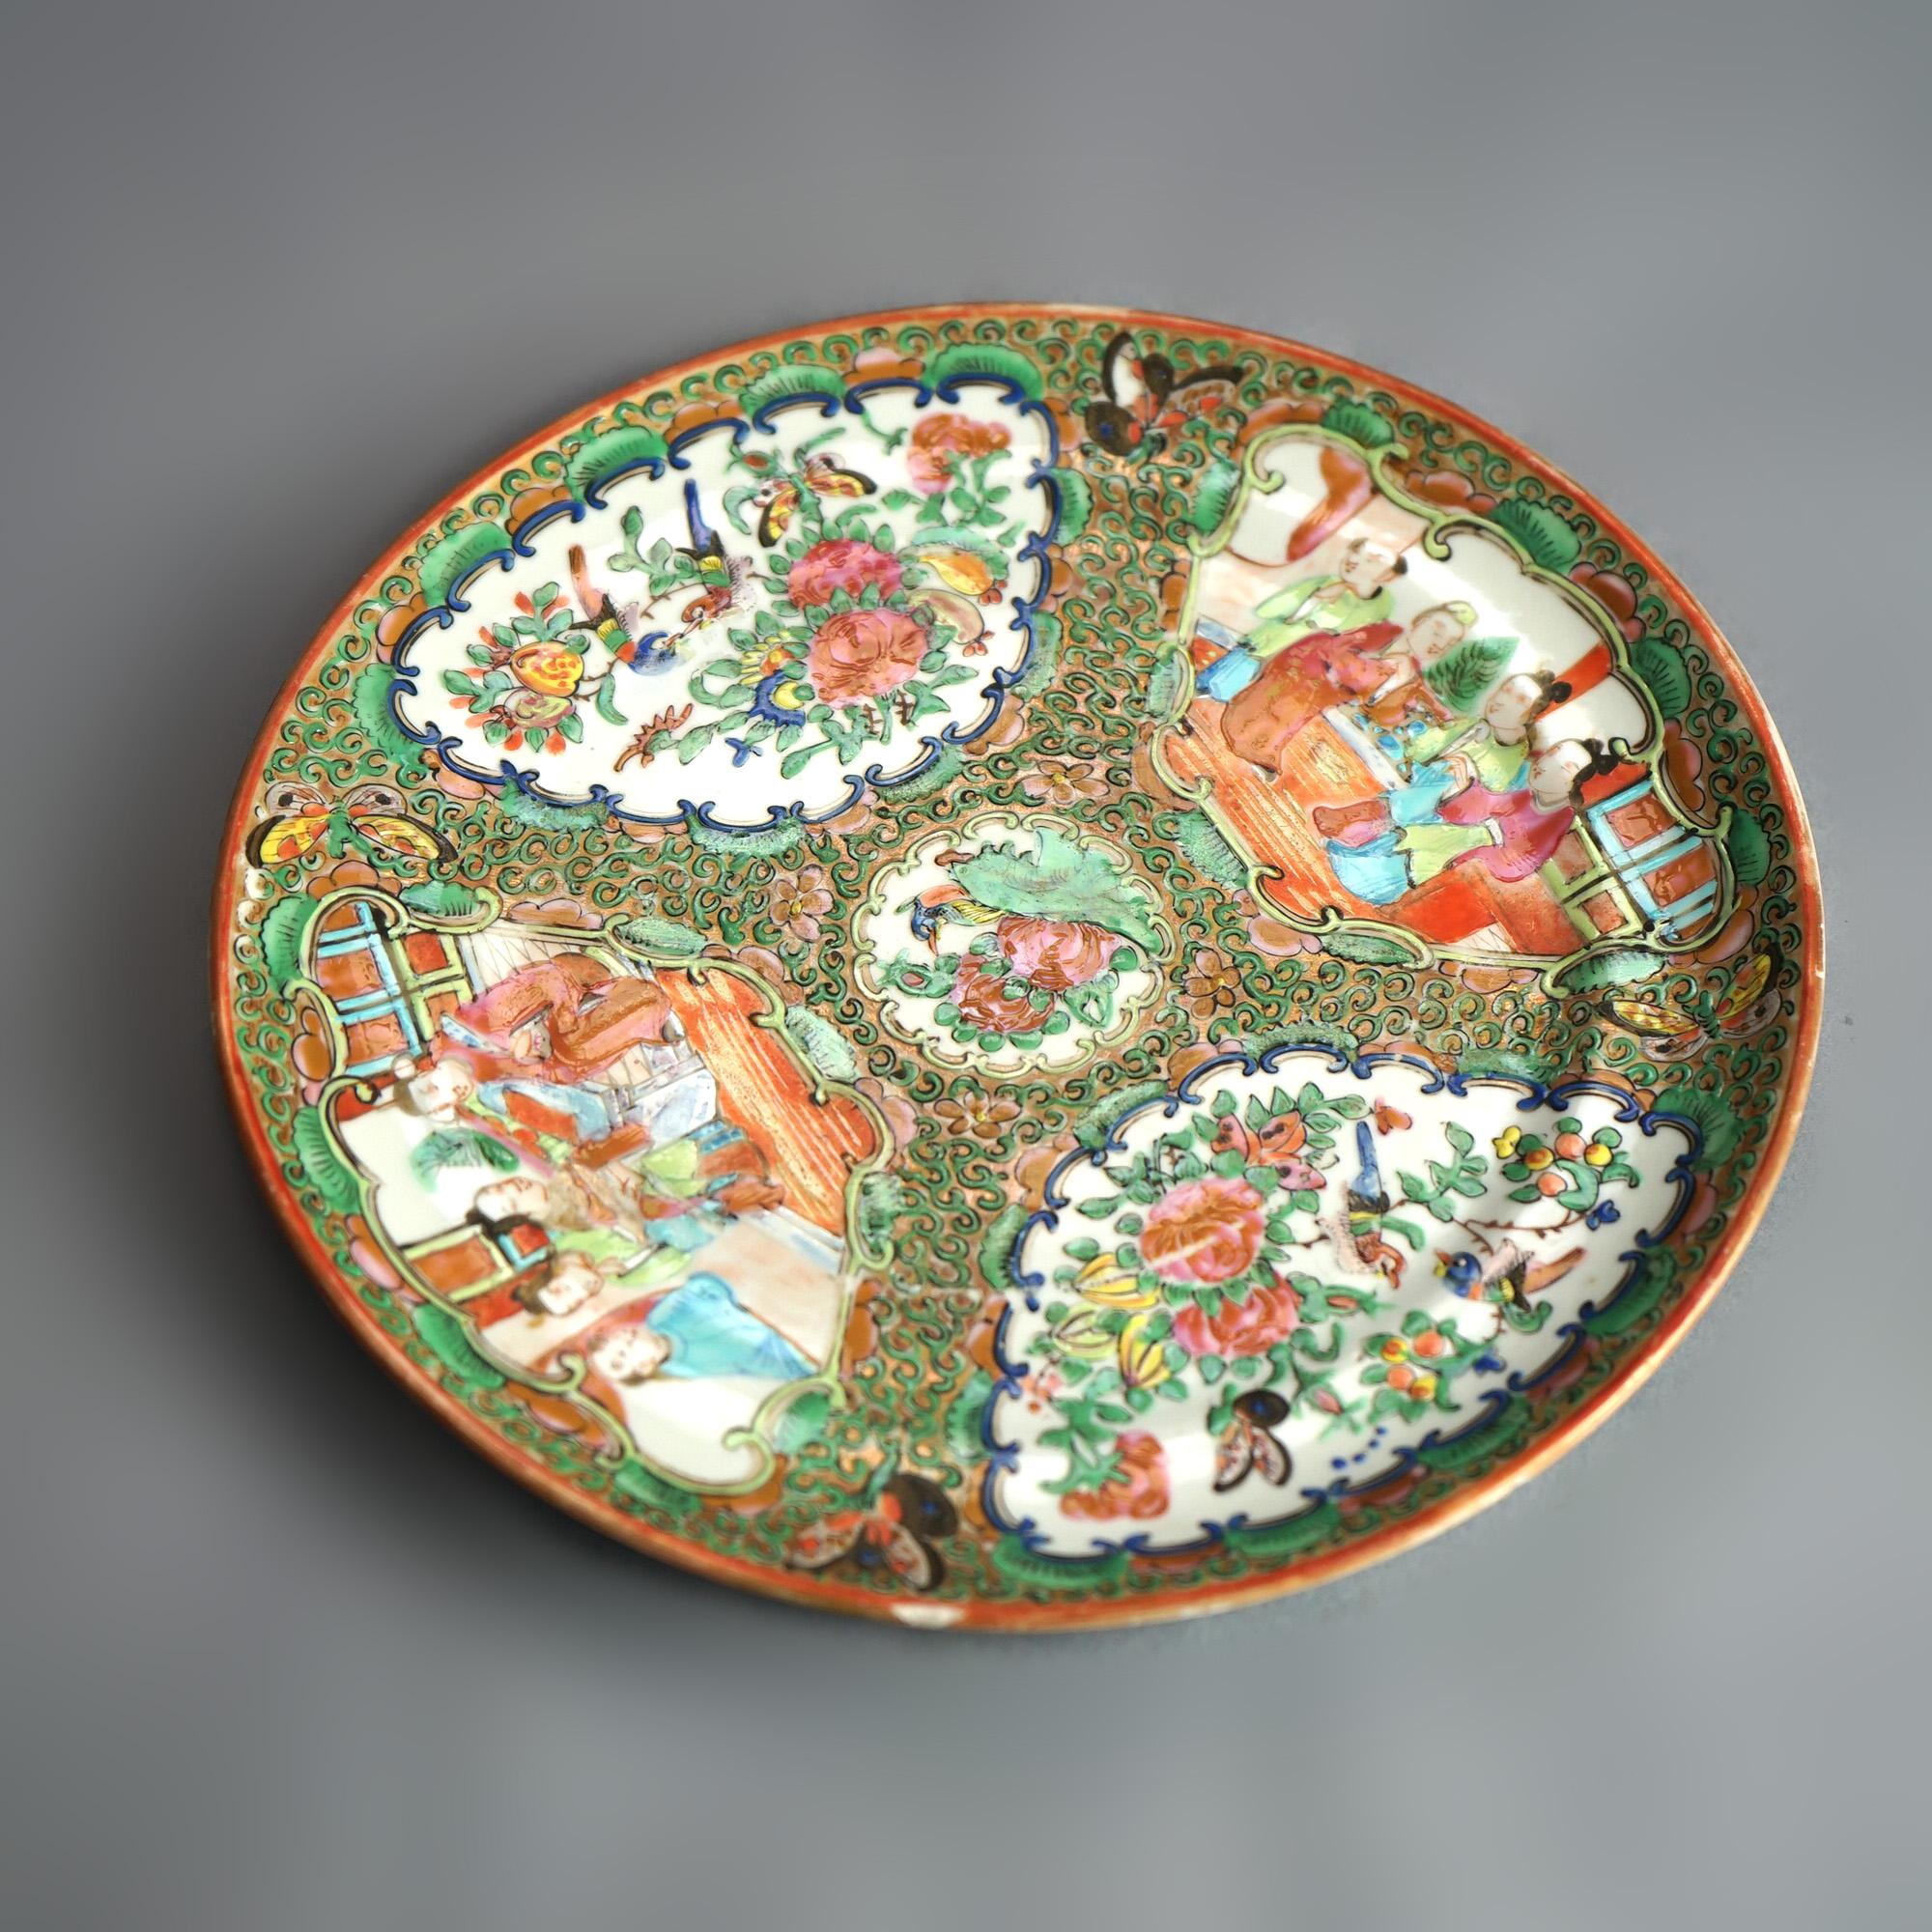 Antique Chinese Rose Medallion Porcelain Plate with Reserves having Gardens & Genre Scenes C1900

Measures - .75